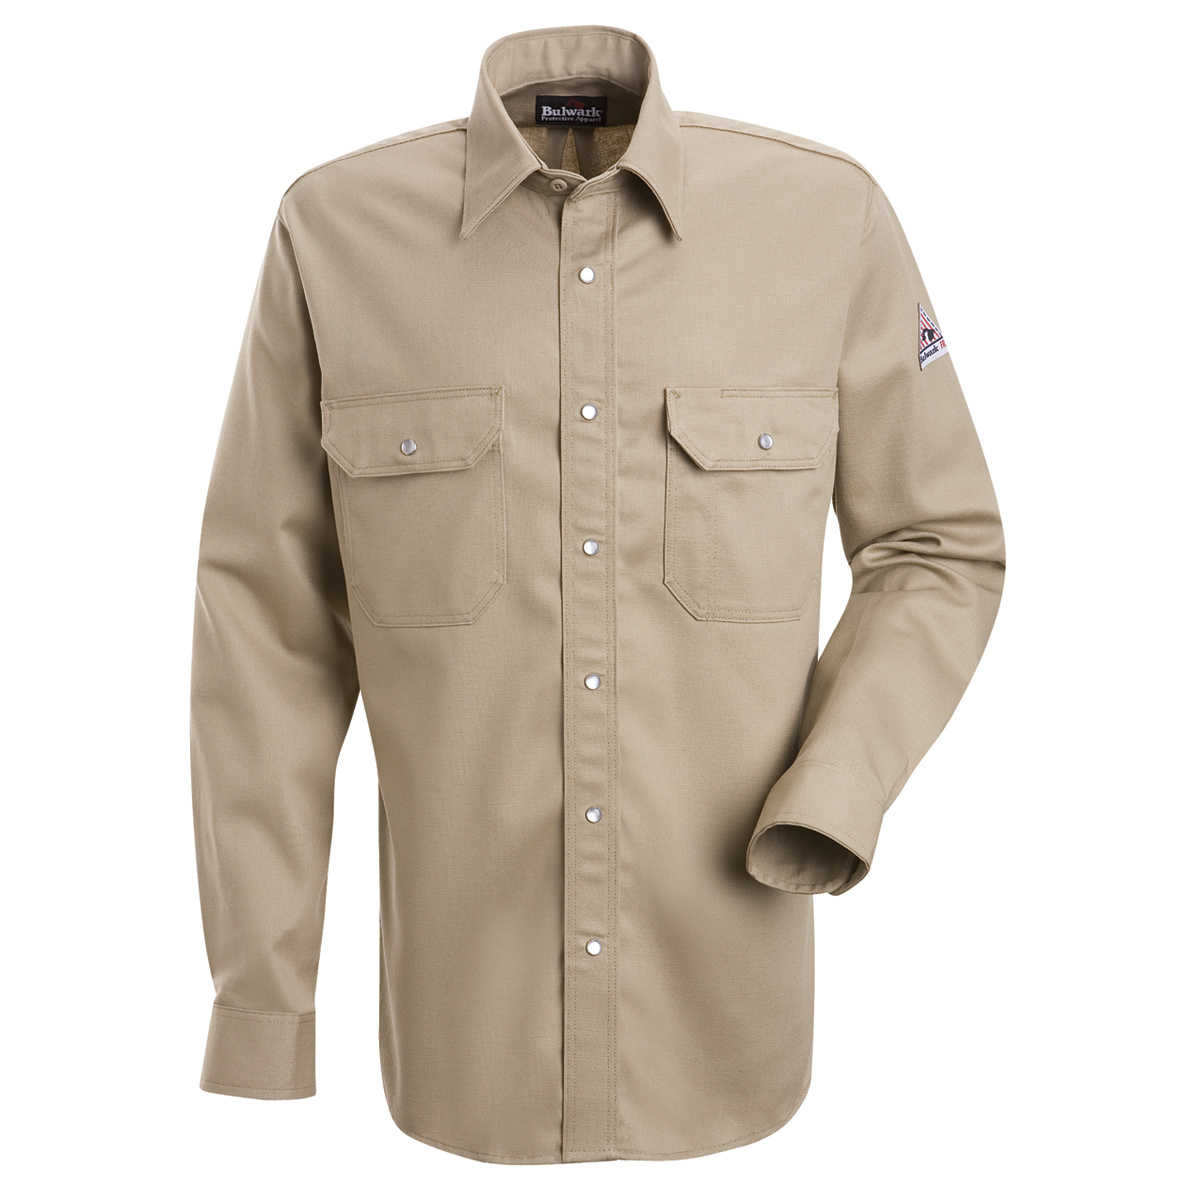 Bulwark® Small| Regular Tan EXCEL FR® Cotton Flame Resistant Uniform Shirt With Snap Front Closure